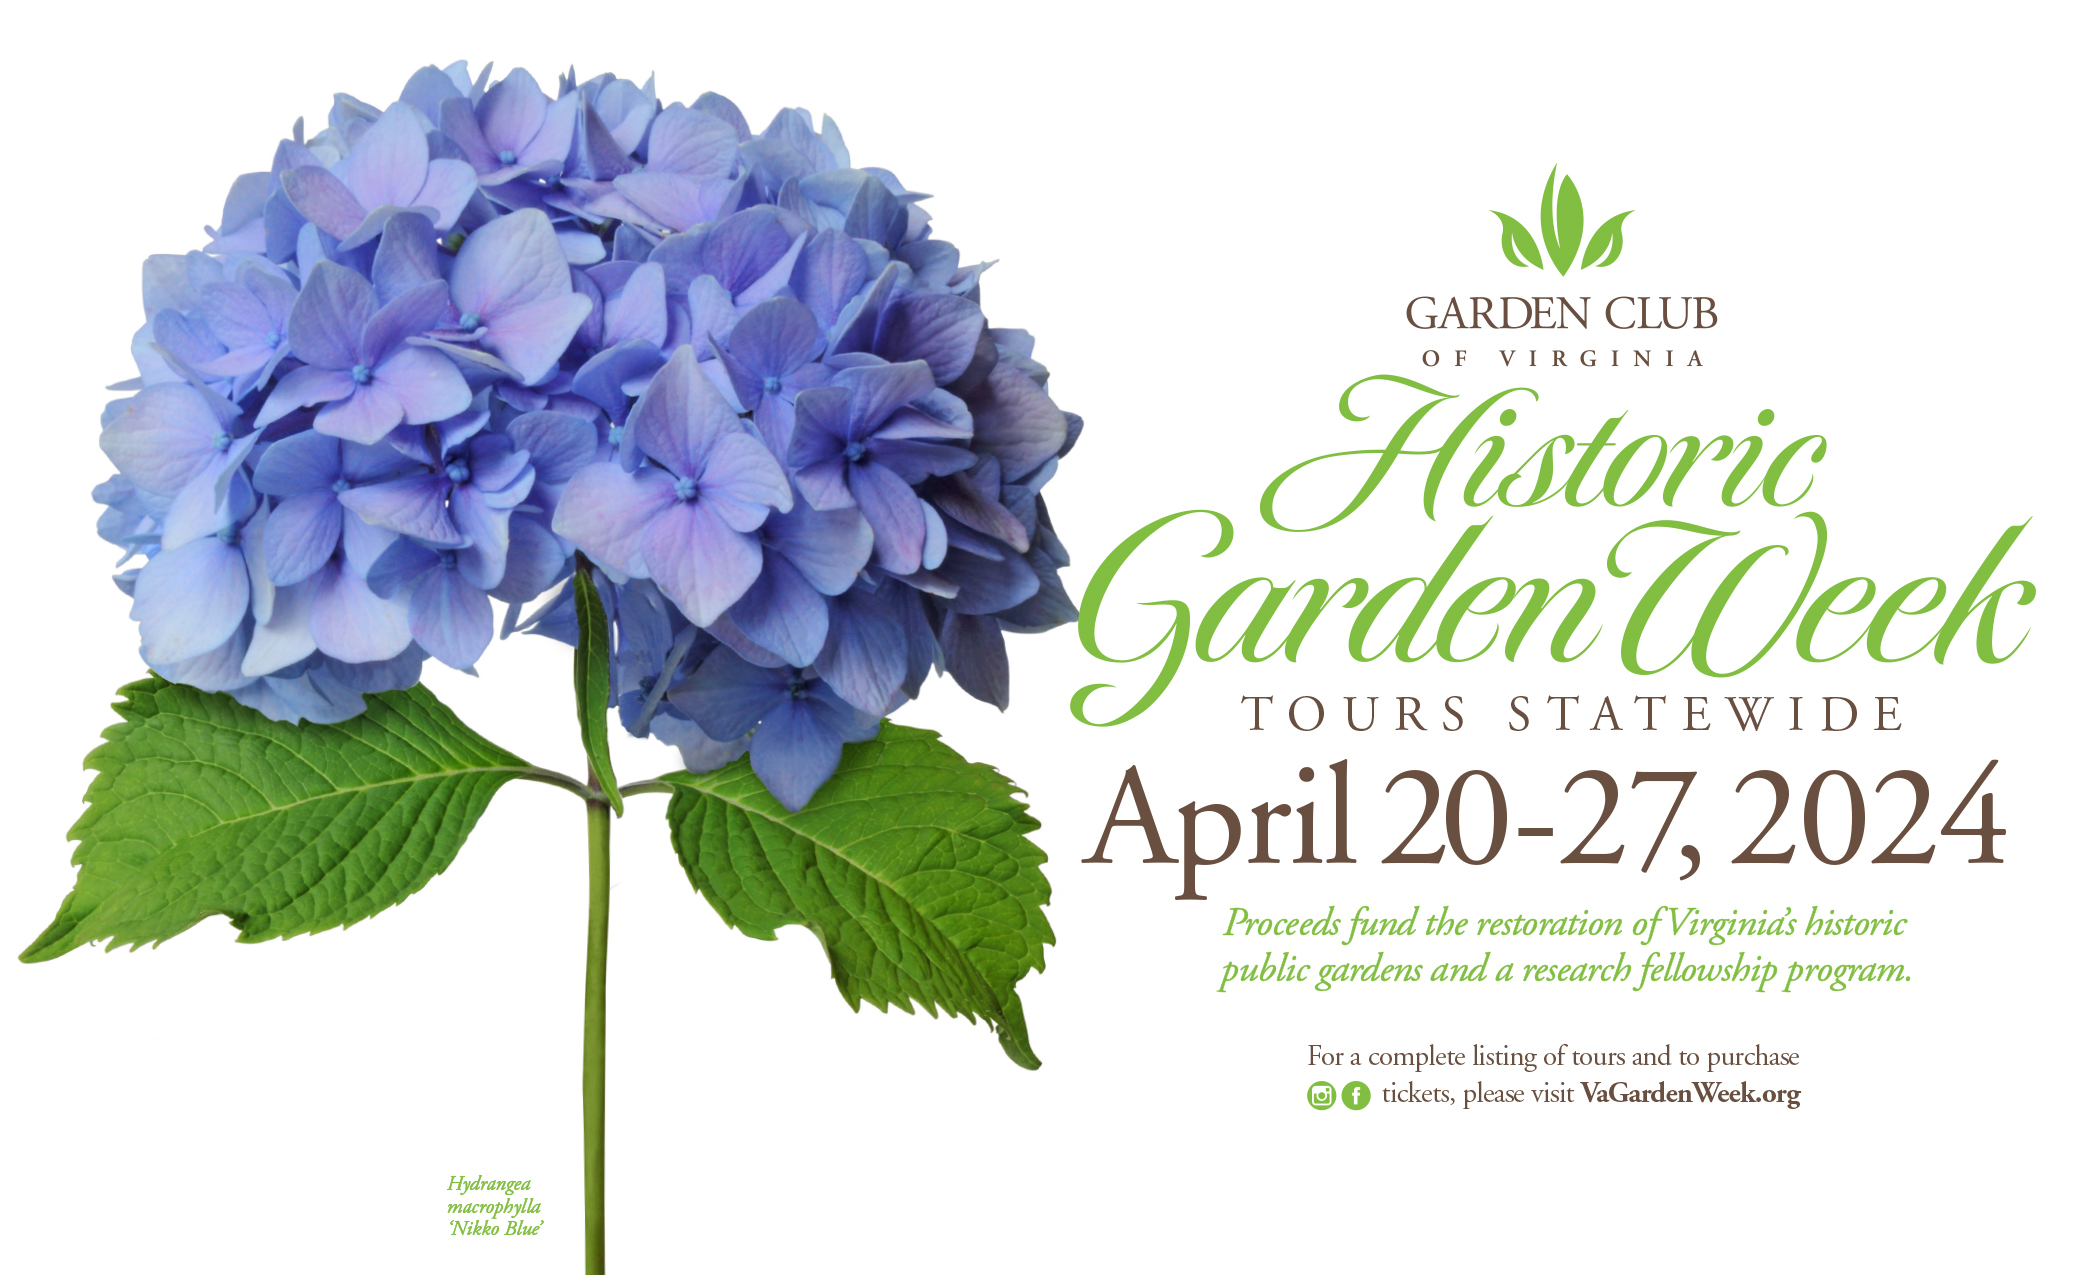 A blue hydrangea next to text about Virginia's Historic Garden Week.